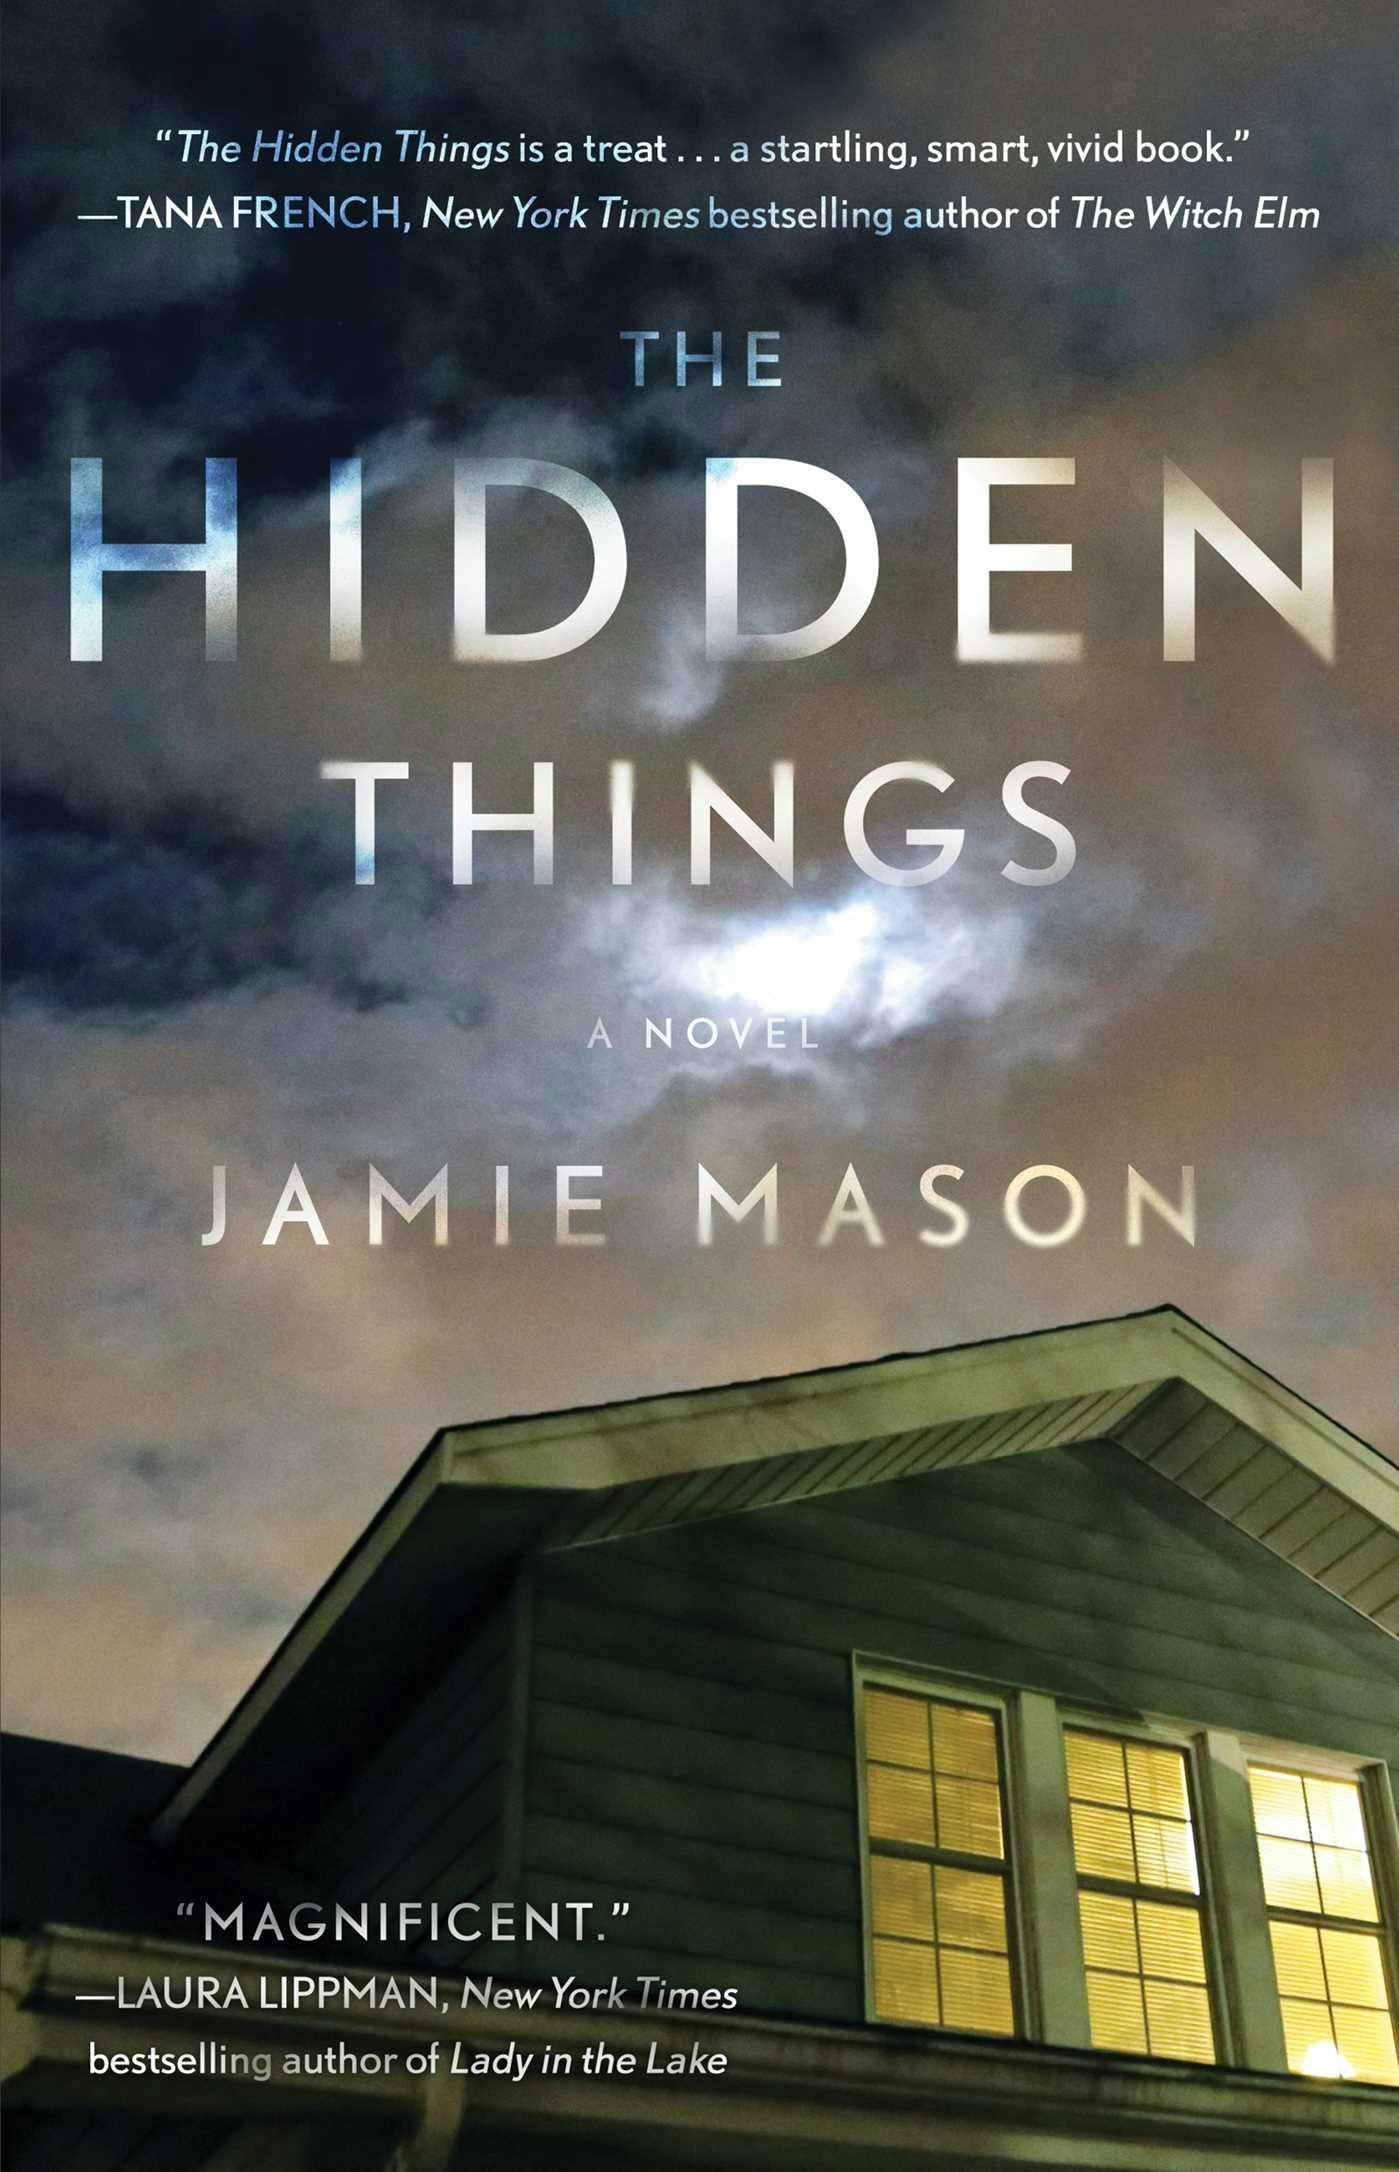 The Hidden Things - Jamie Mason